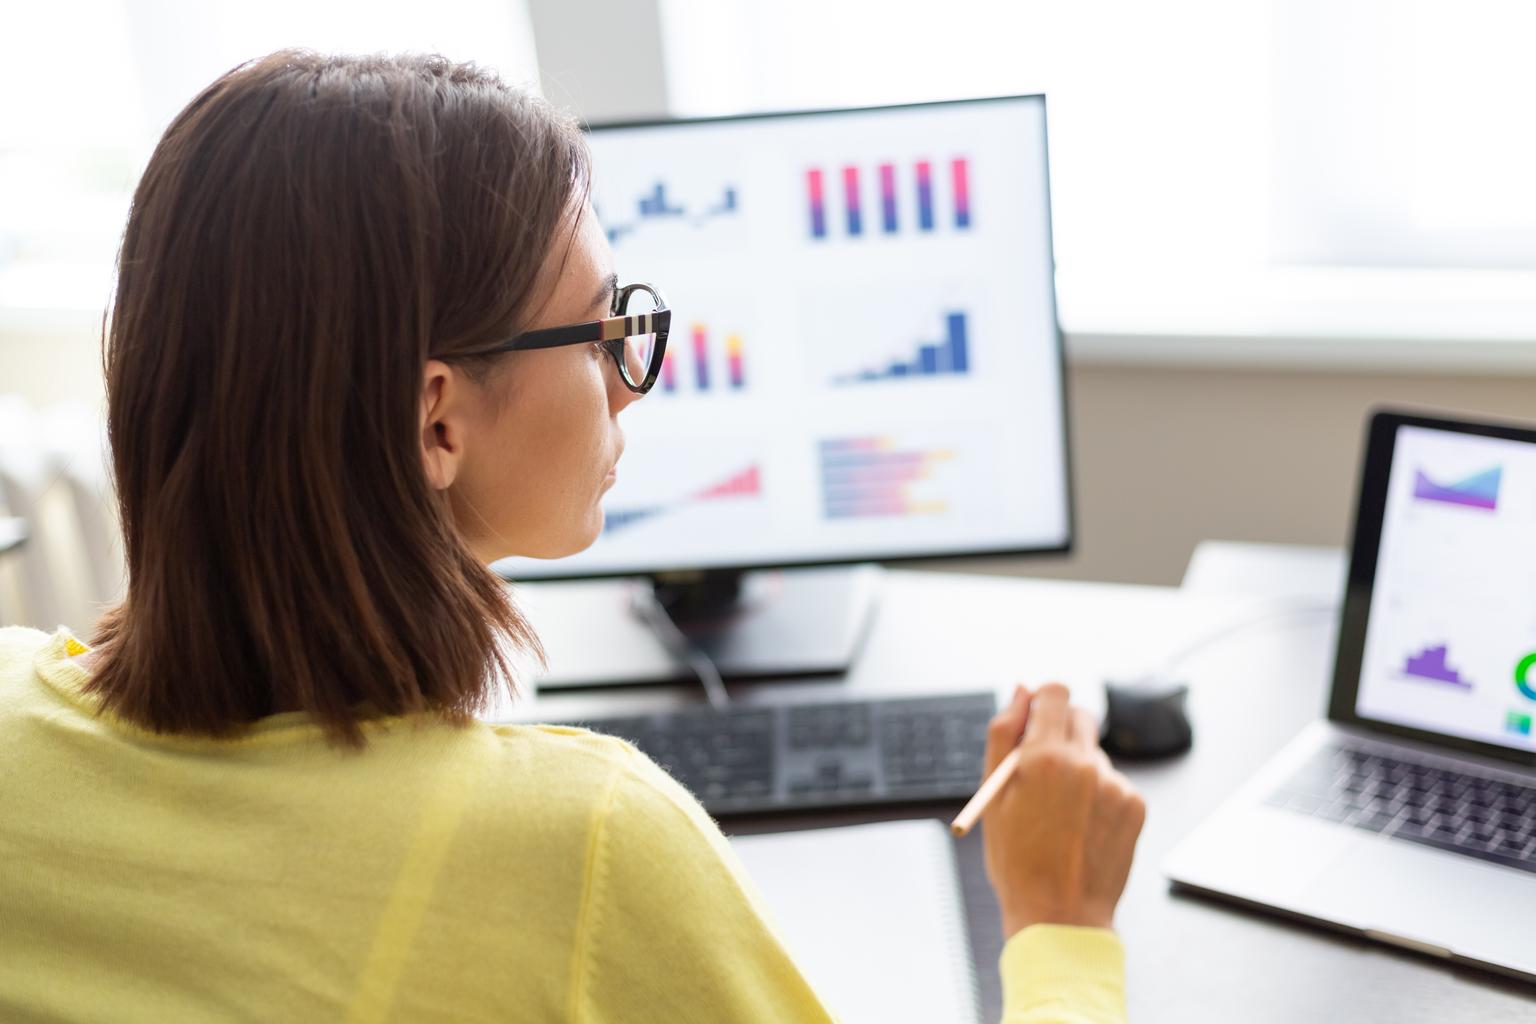 A female financial advisor analyzes data on a dashboard with graphs